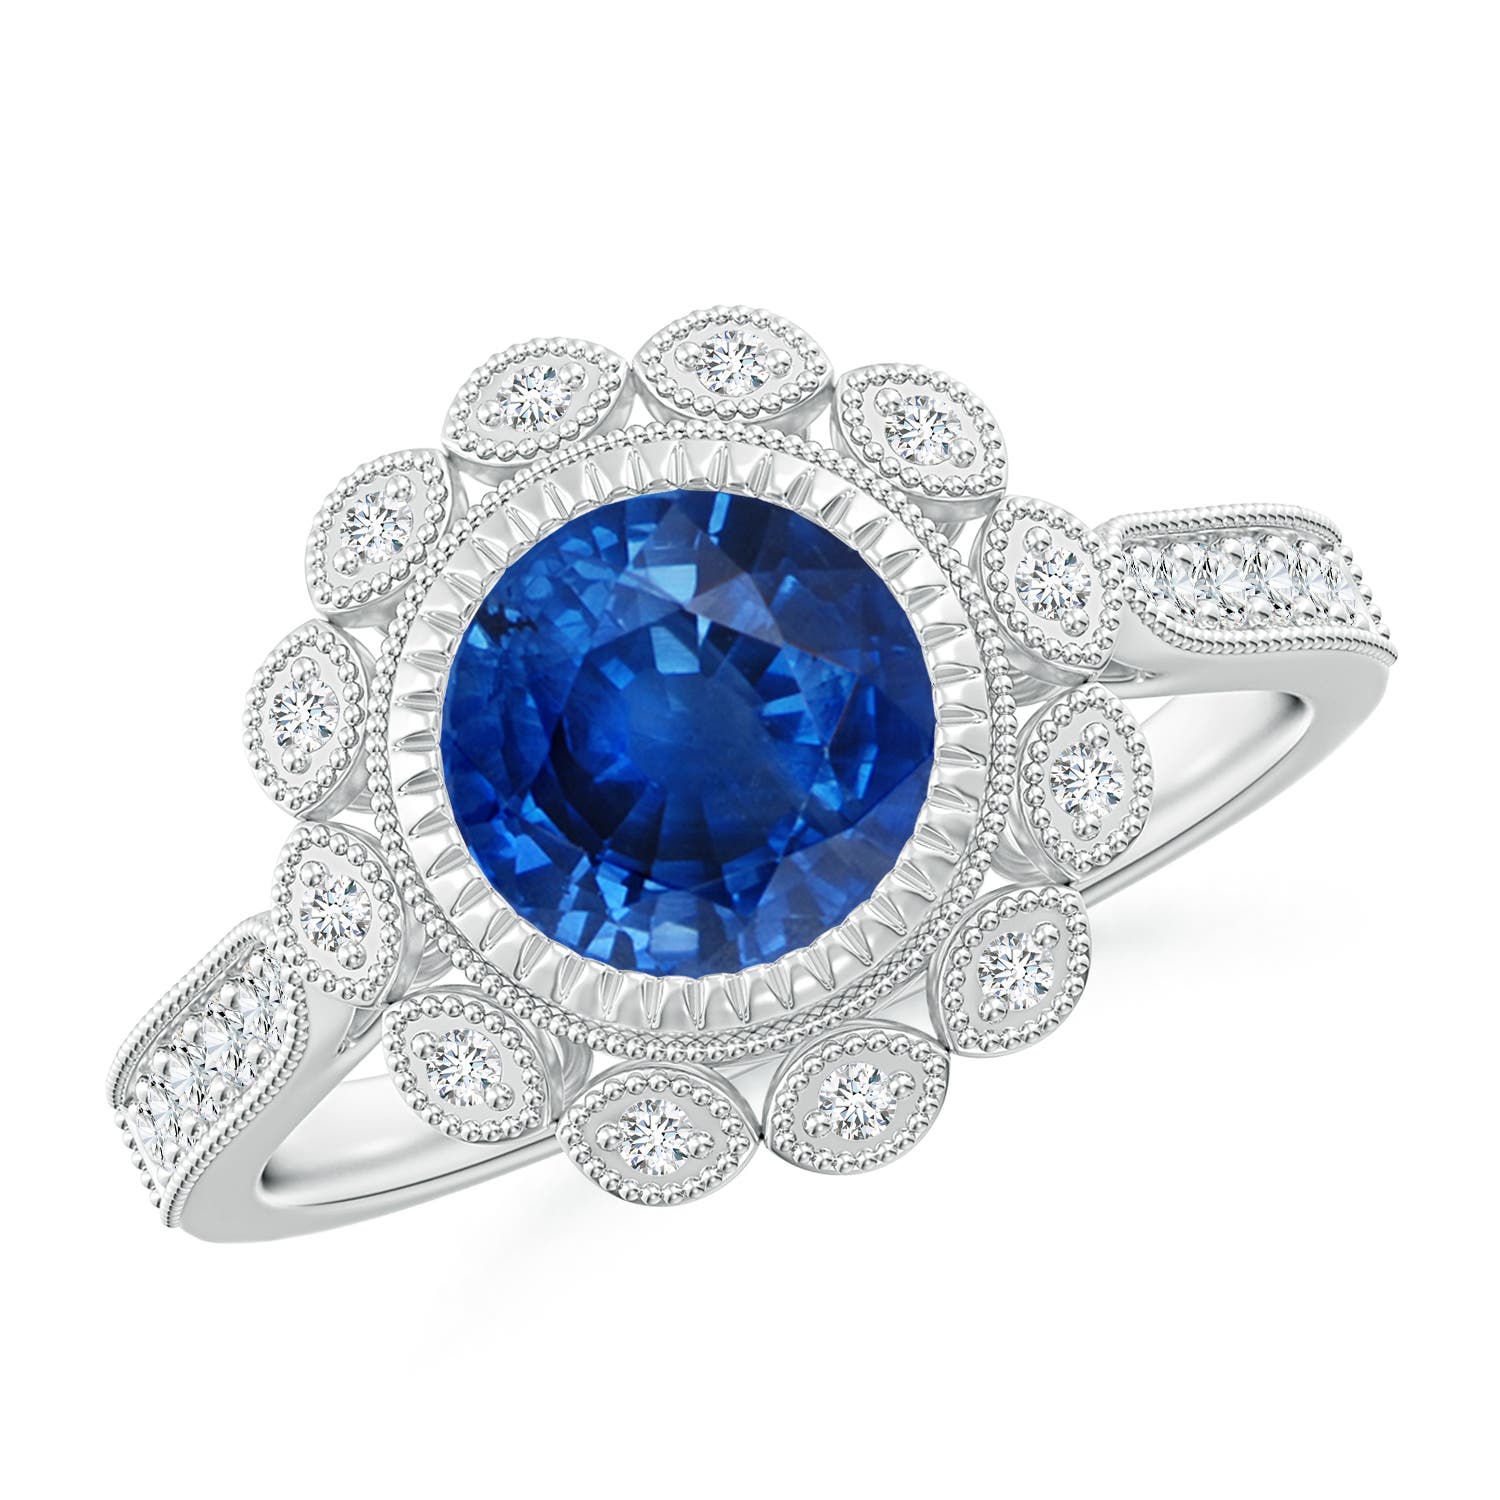 Vintage Style Sapphire and Diamond Ring with Latticework | Angara